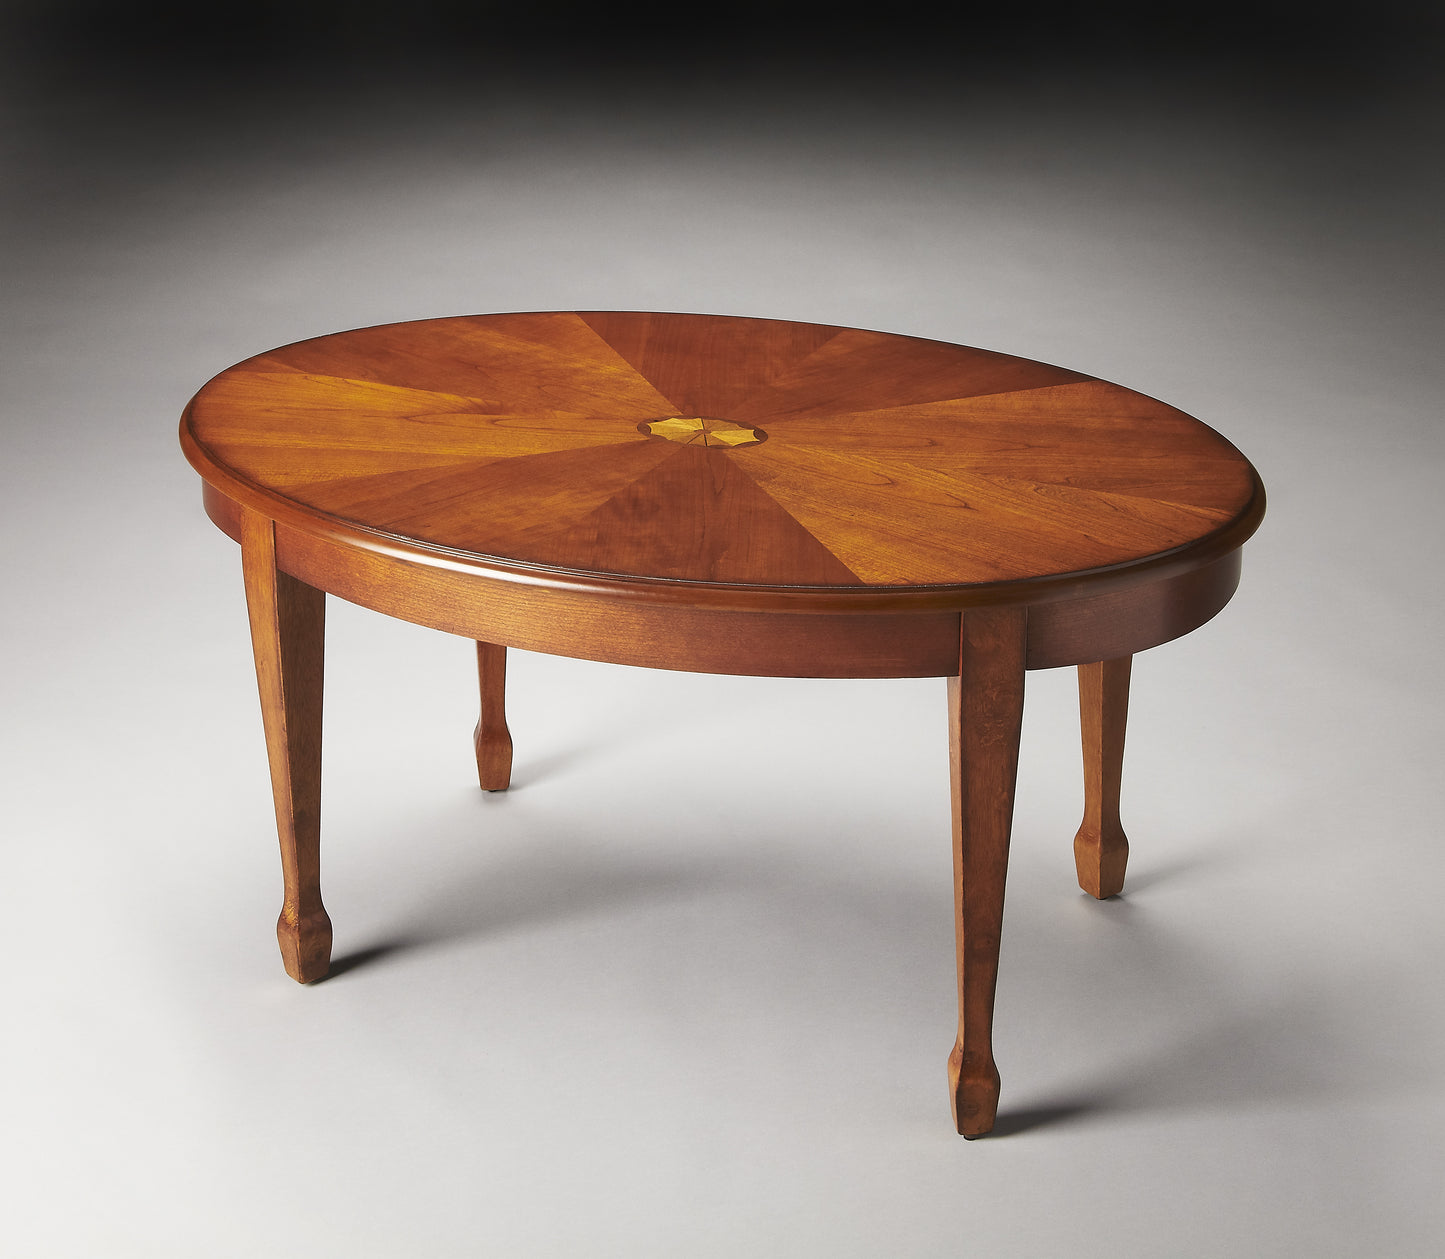 Clayton Oval Wood Coffee Table in Medium Brown  1234101